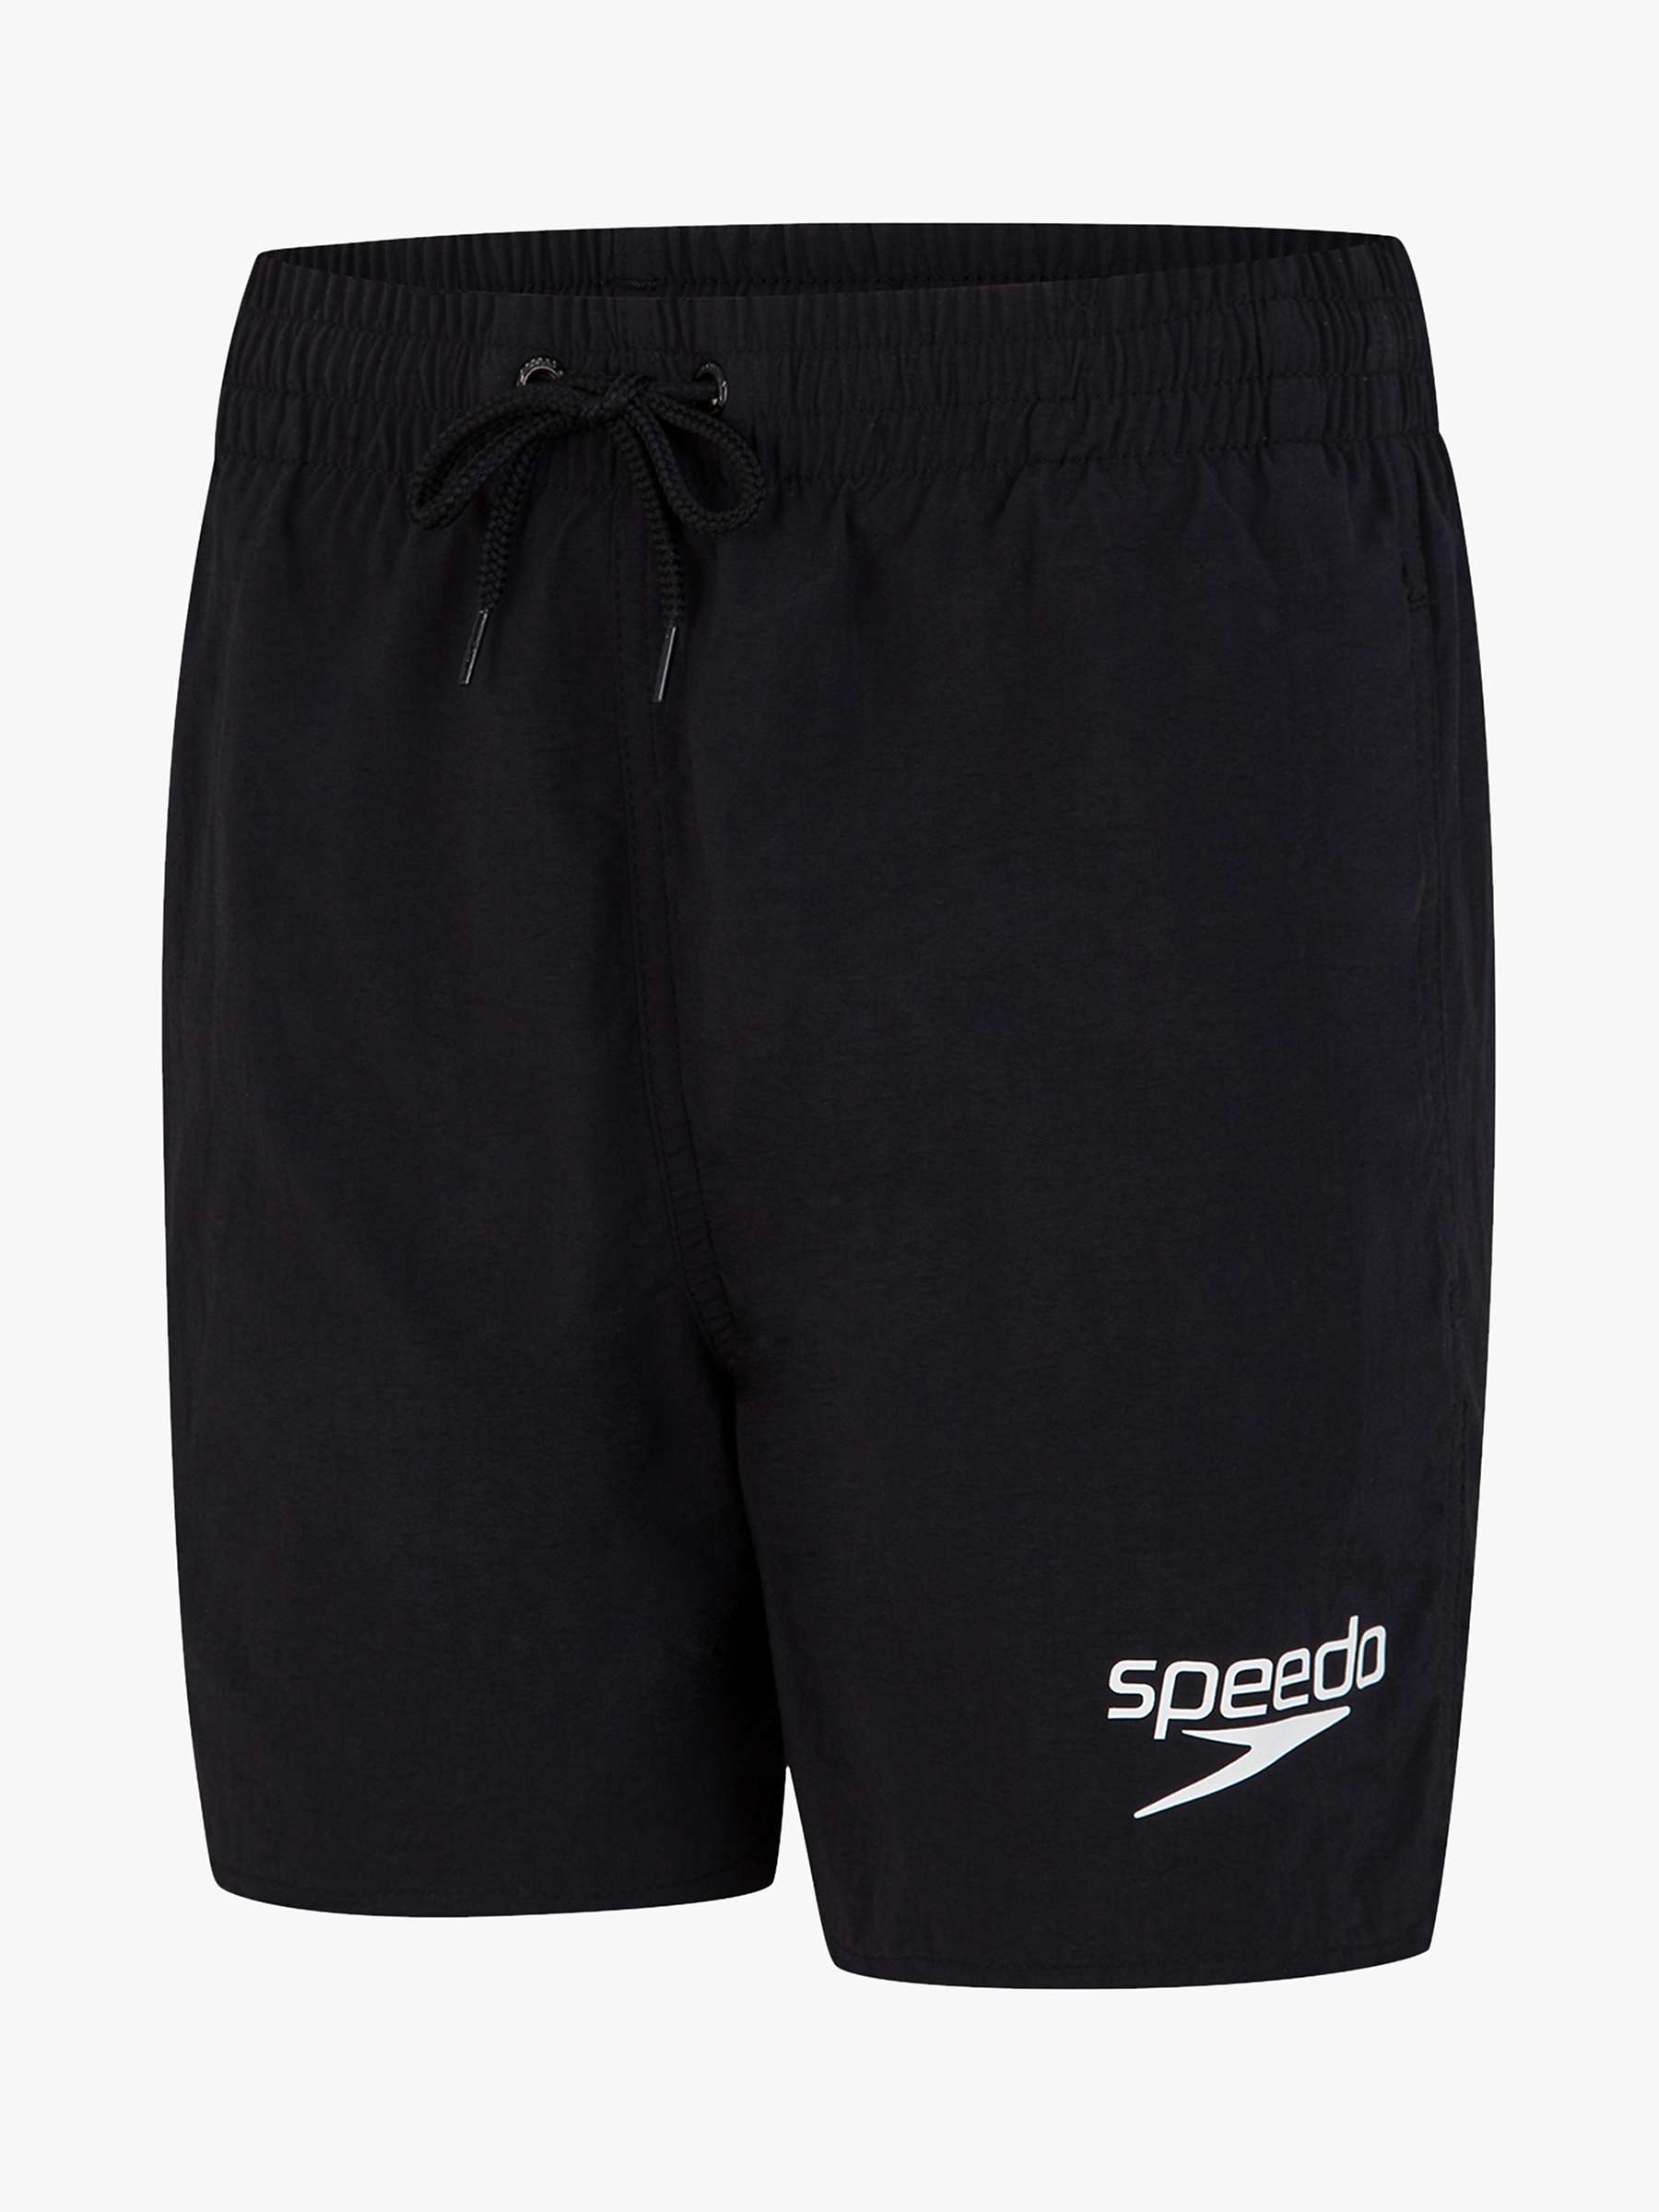 Buy Speedo Boys' Essentials 13" Swim Shorts Online at johnlewis.com